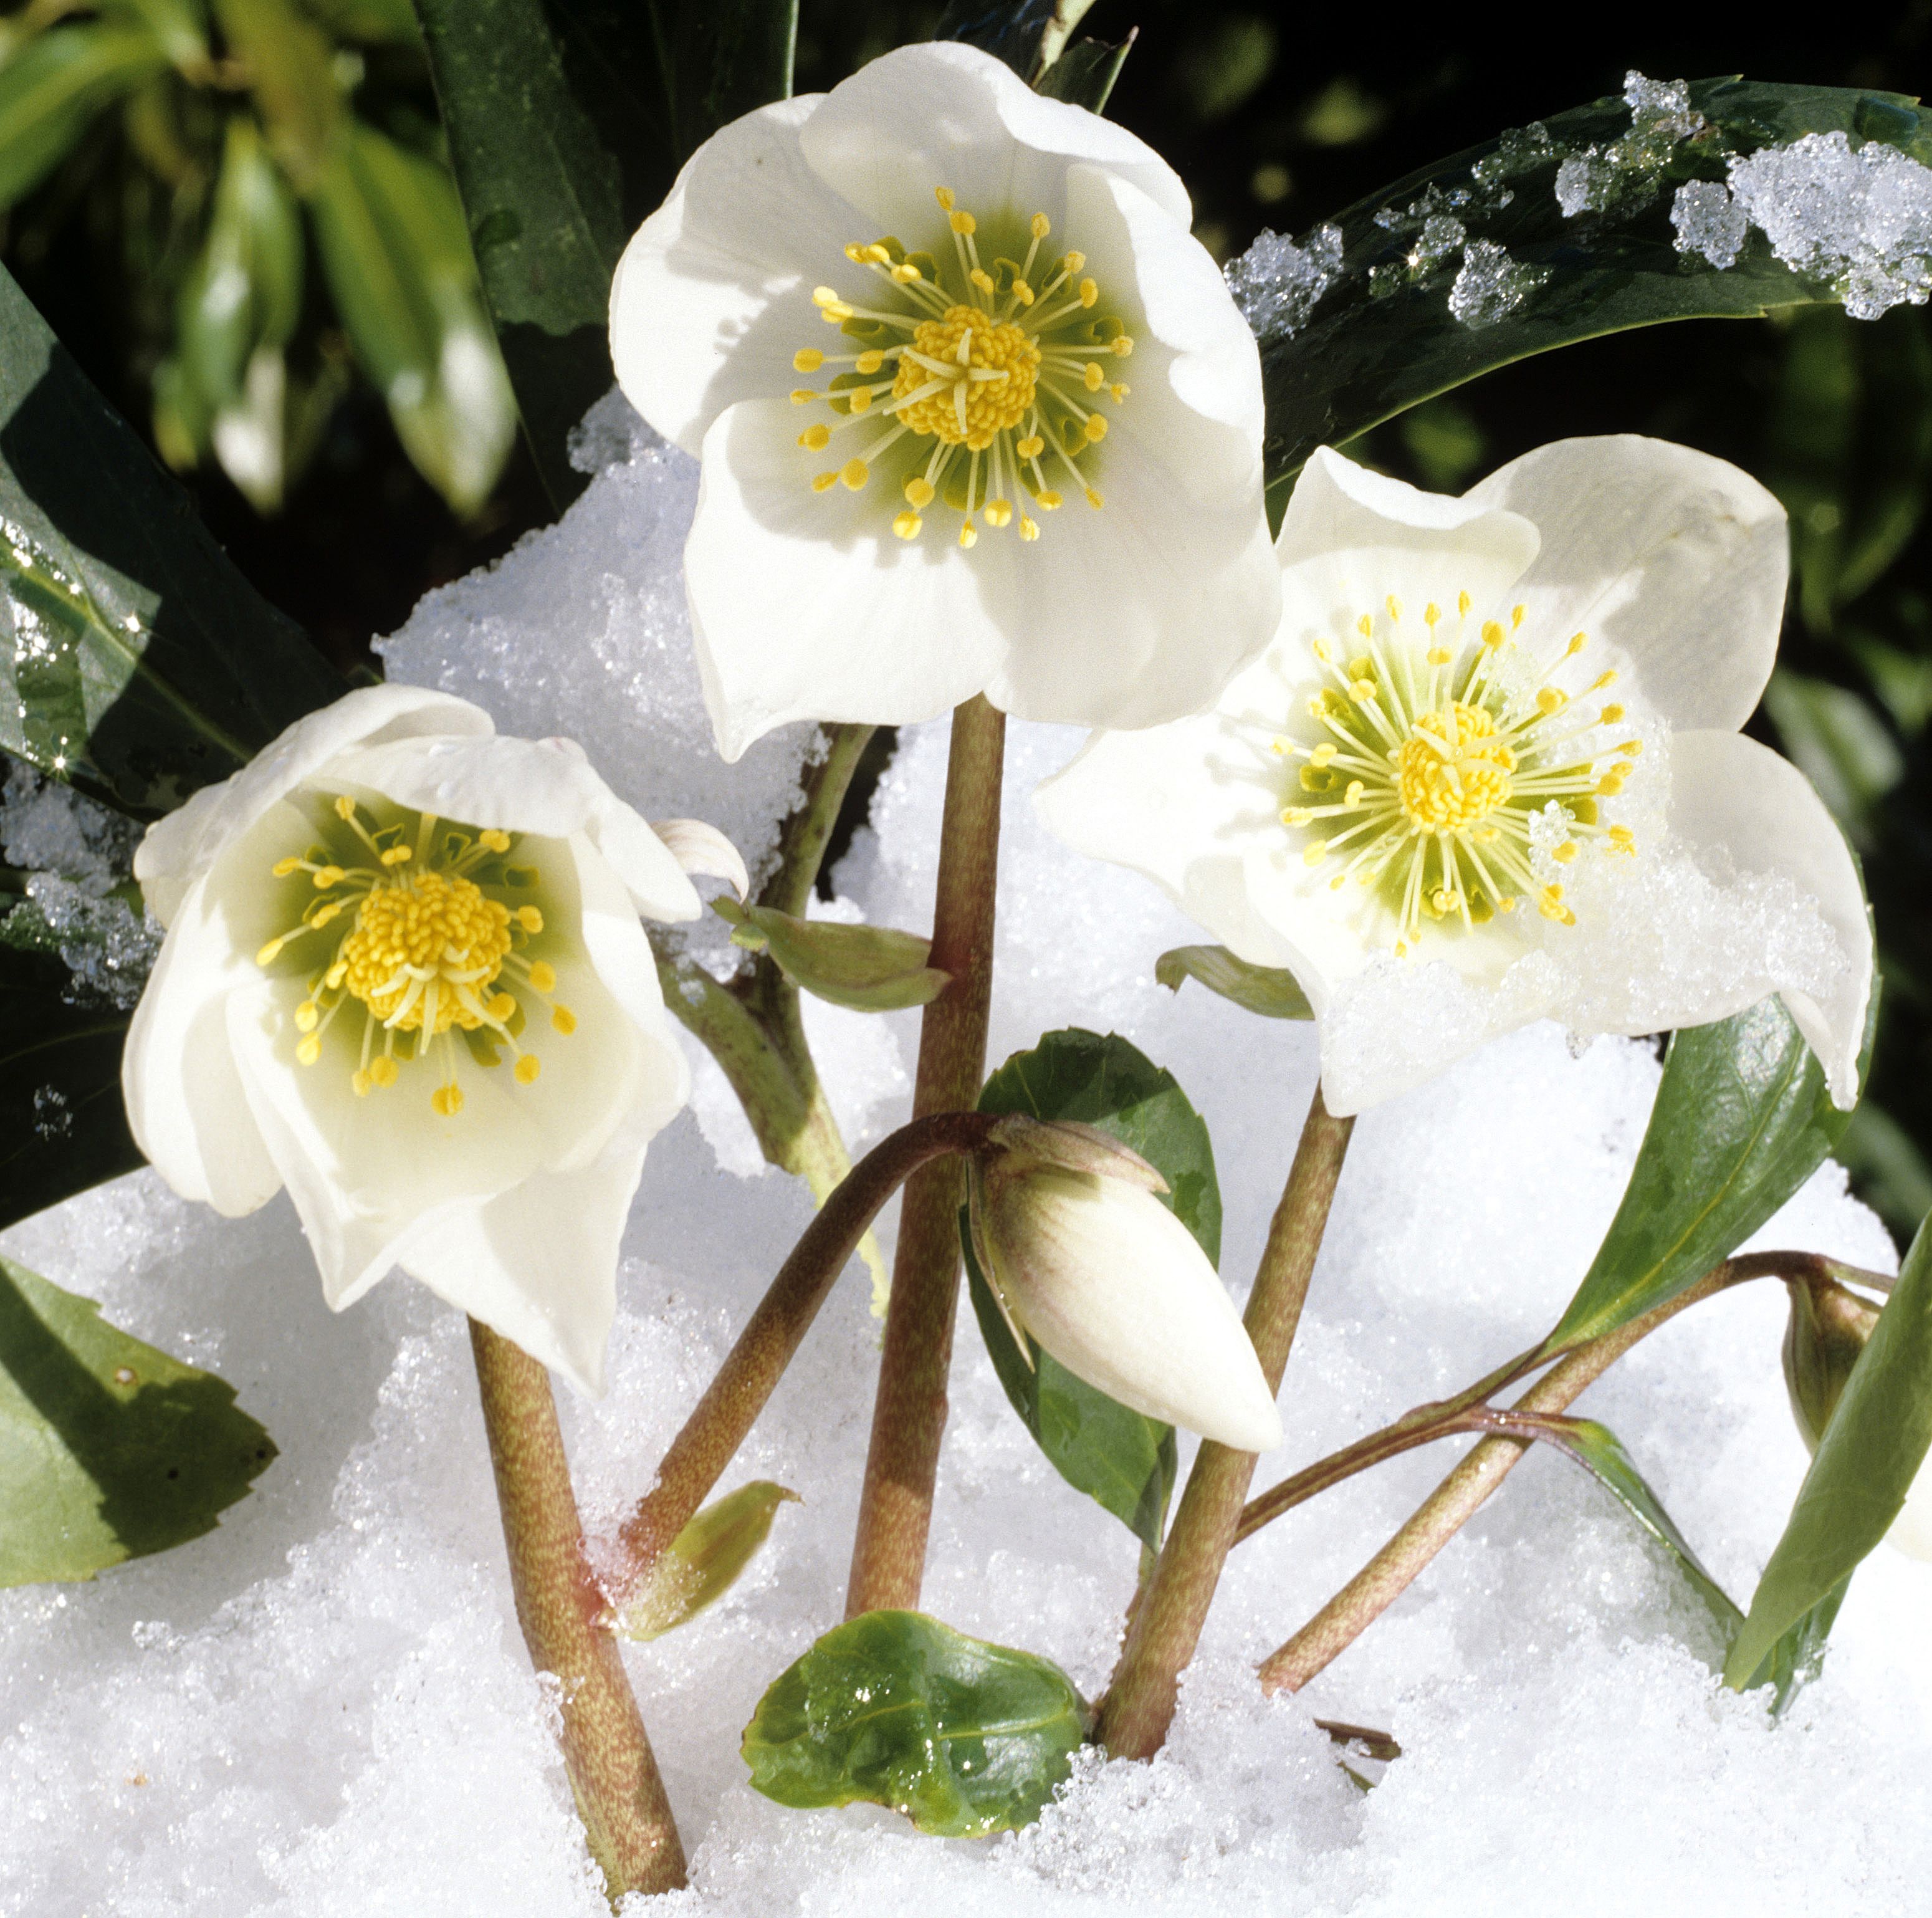 10 winter flowers for your garden​